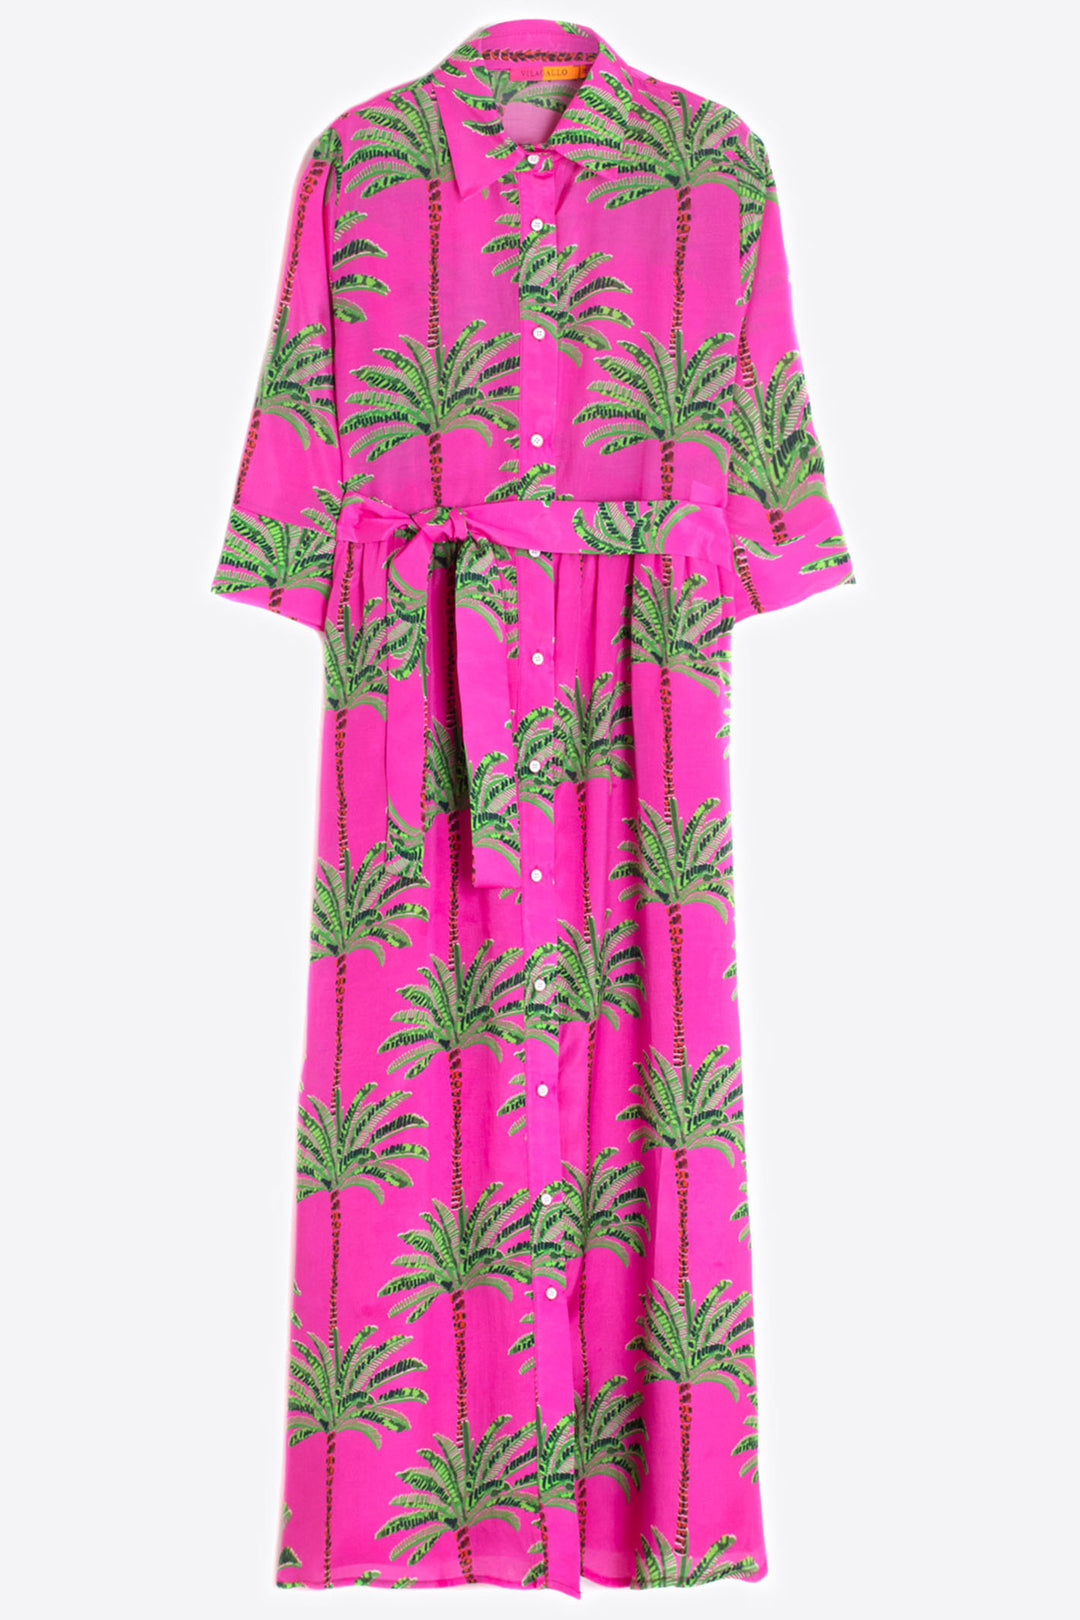 Vilagallo 31305 Pink Palm Print Shirt Dress With Belt - Olivia Grace Fashion